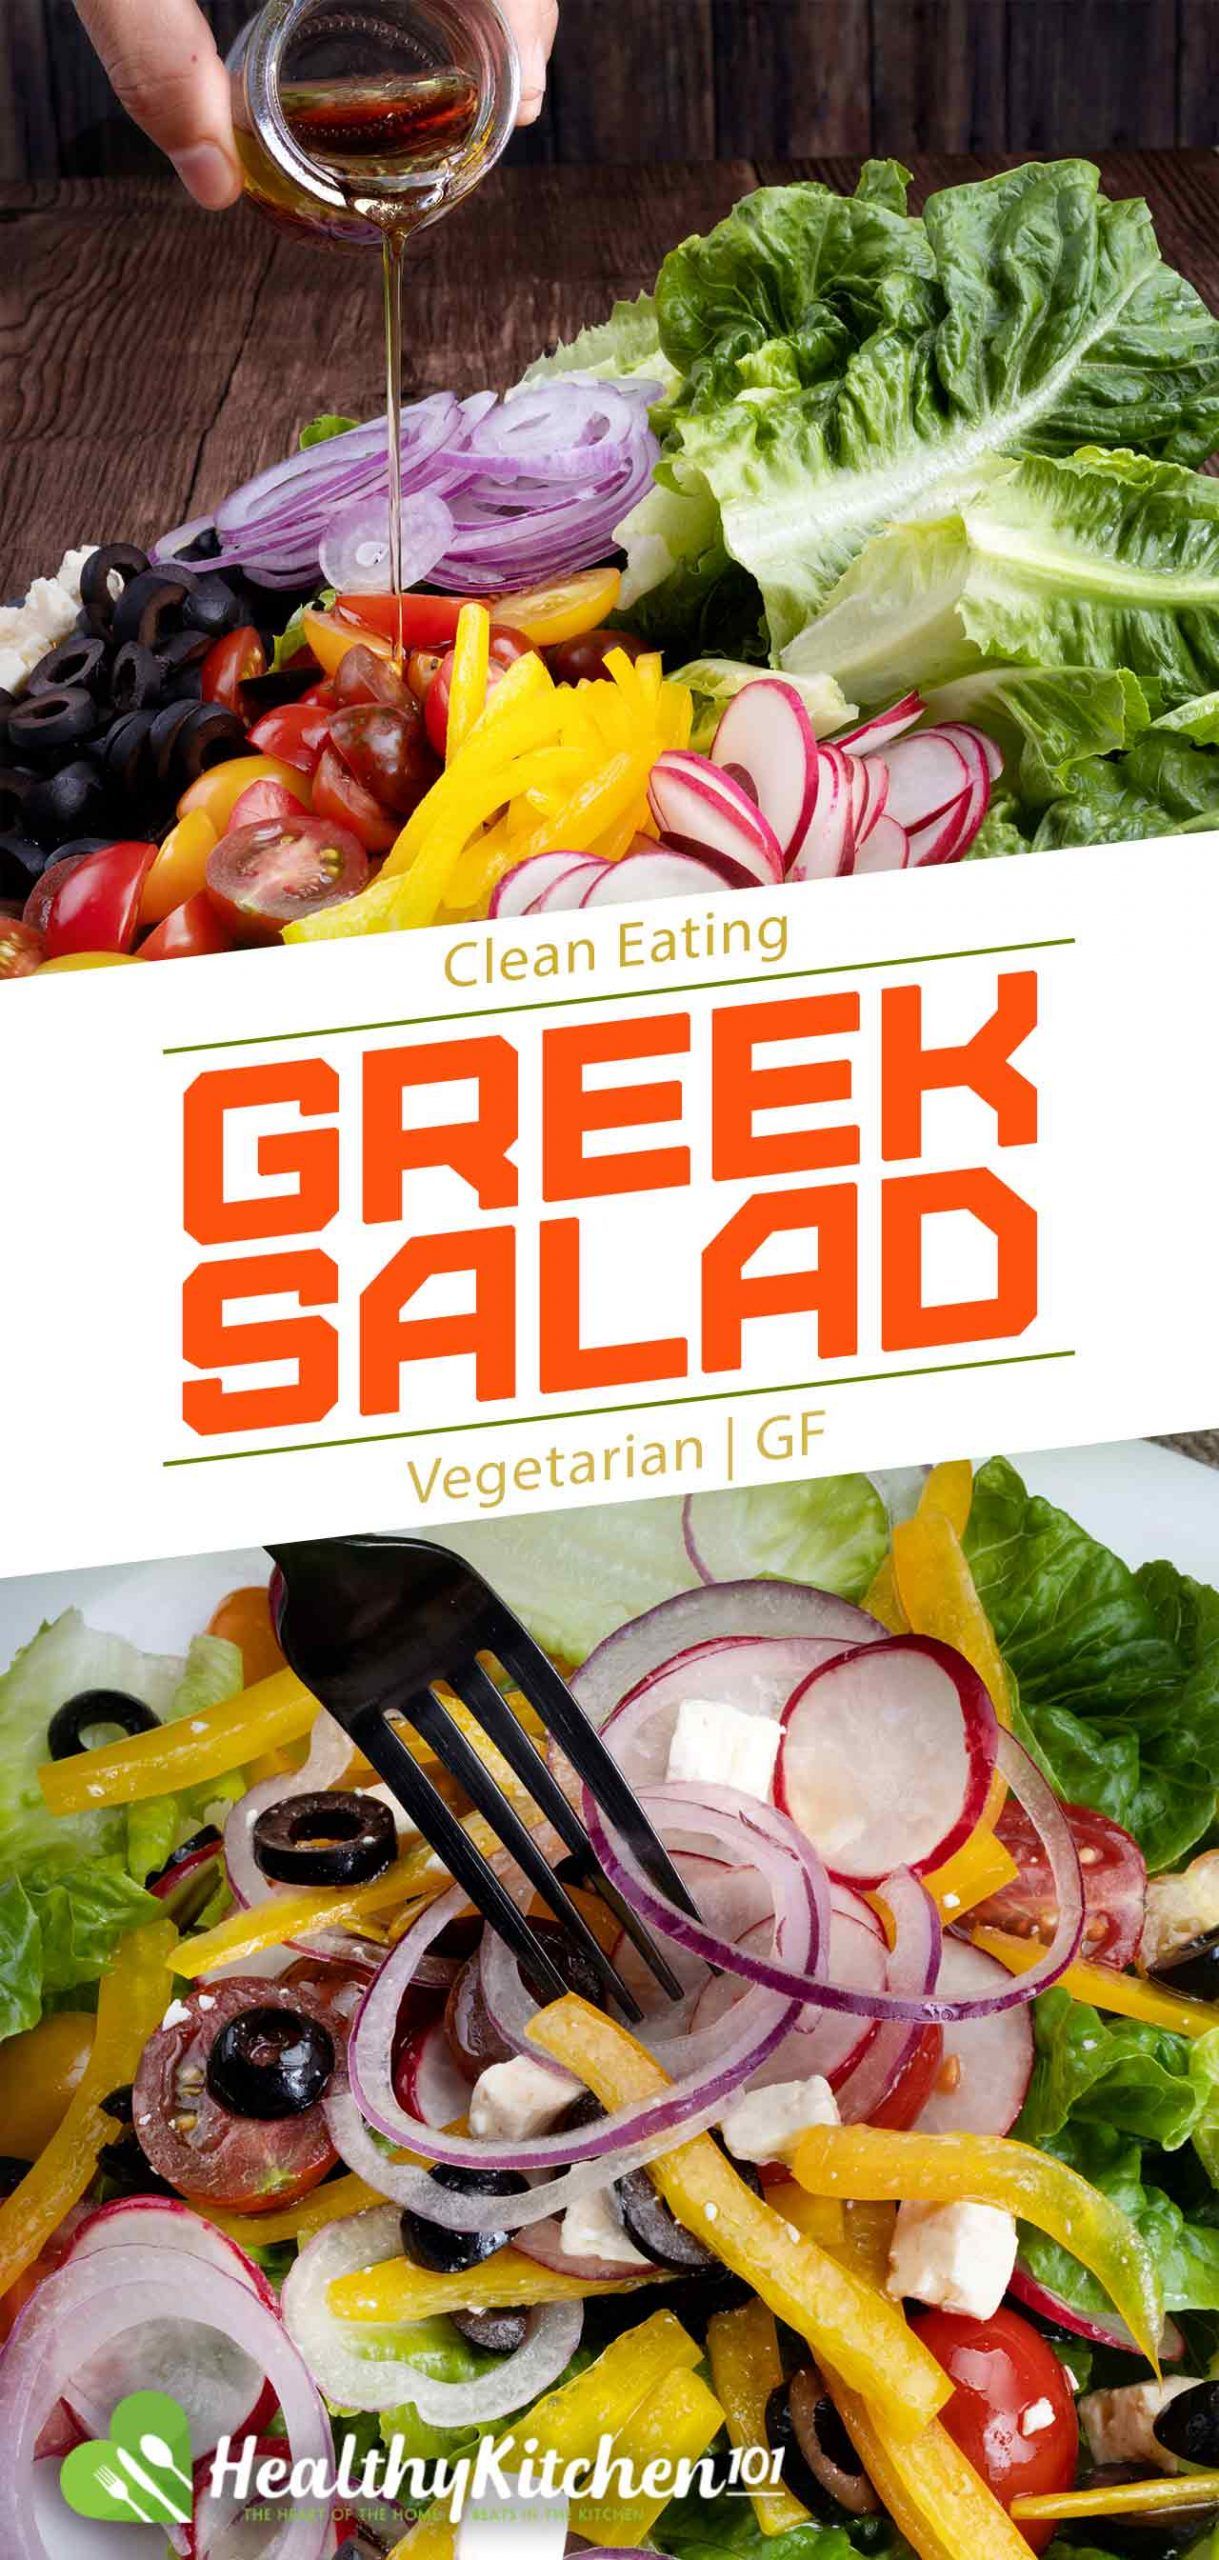 Homemade Greek salad